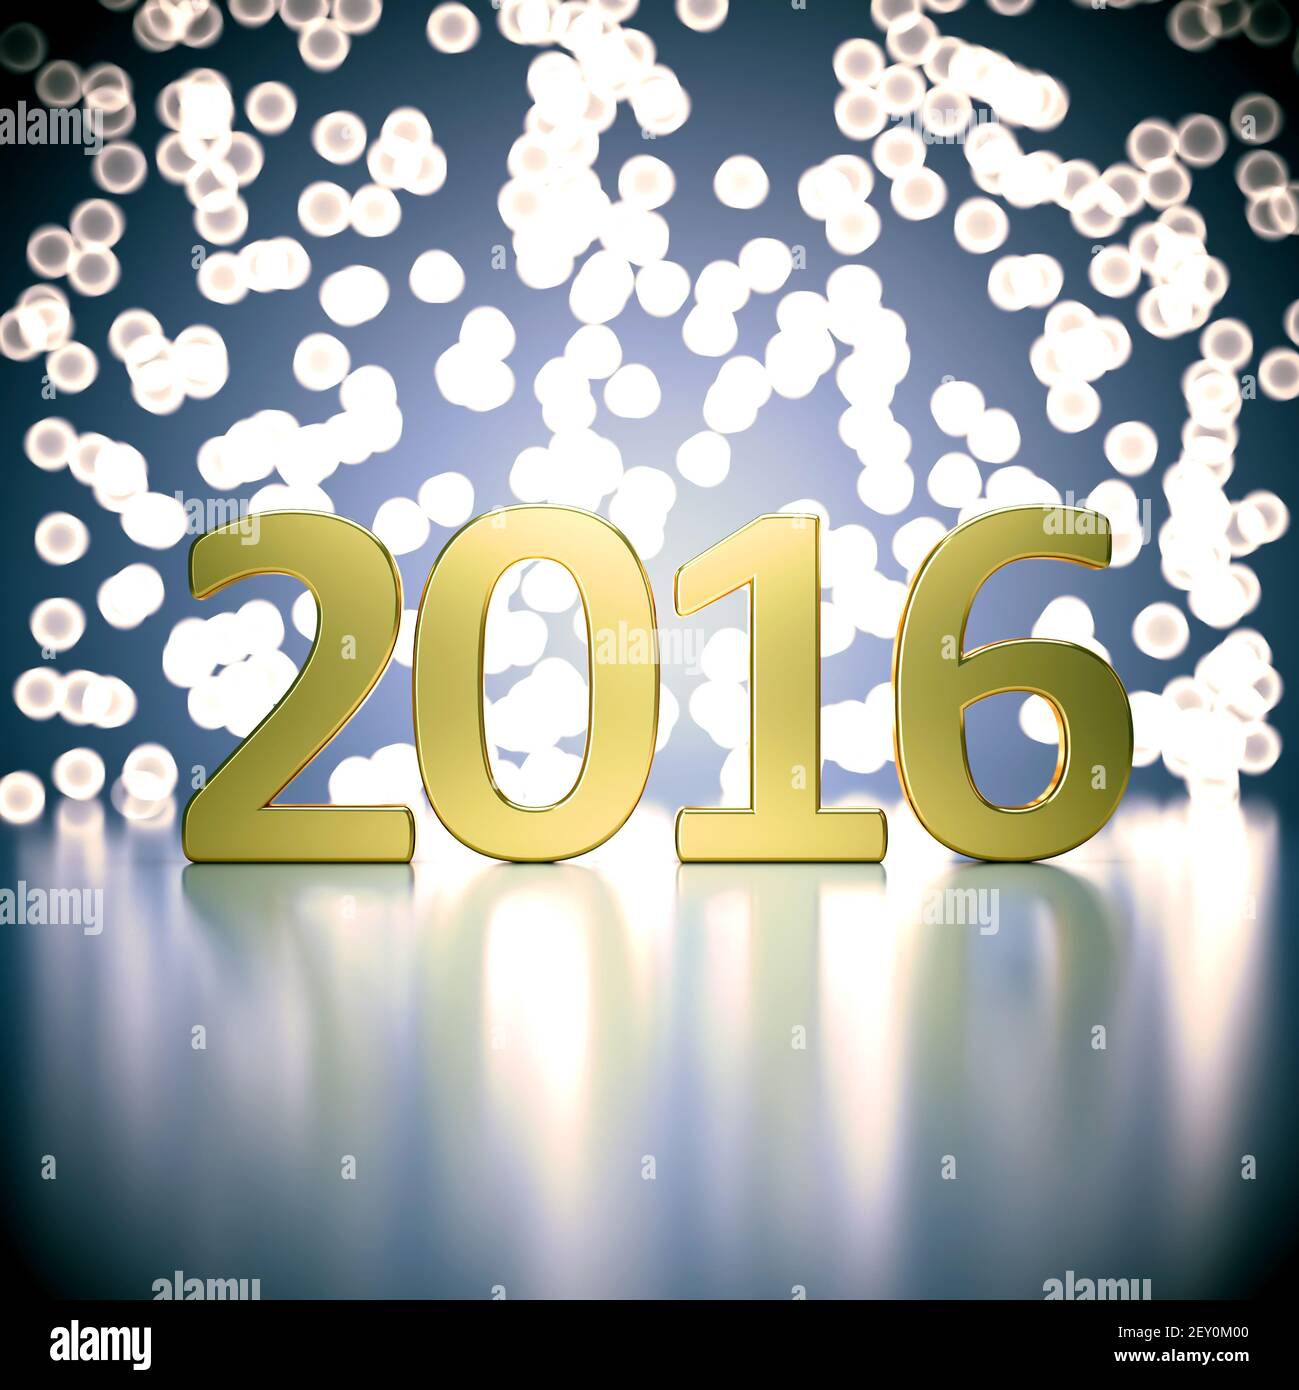 2016 New Year digits Stock Photo